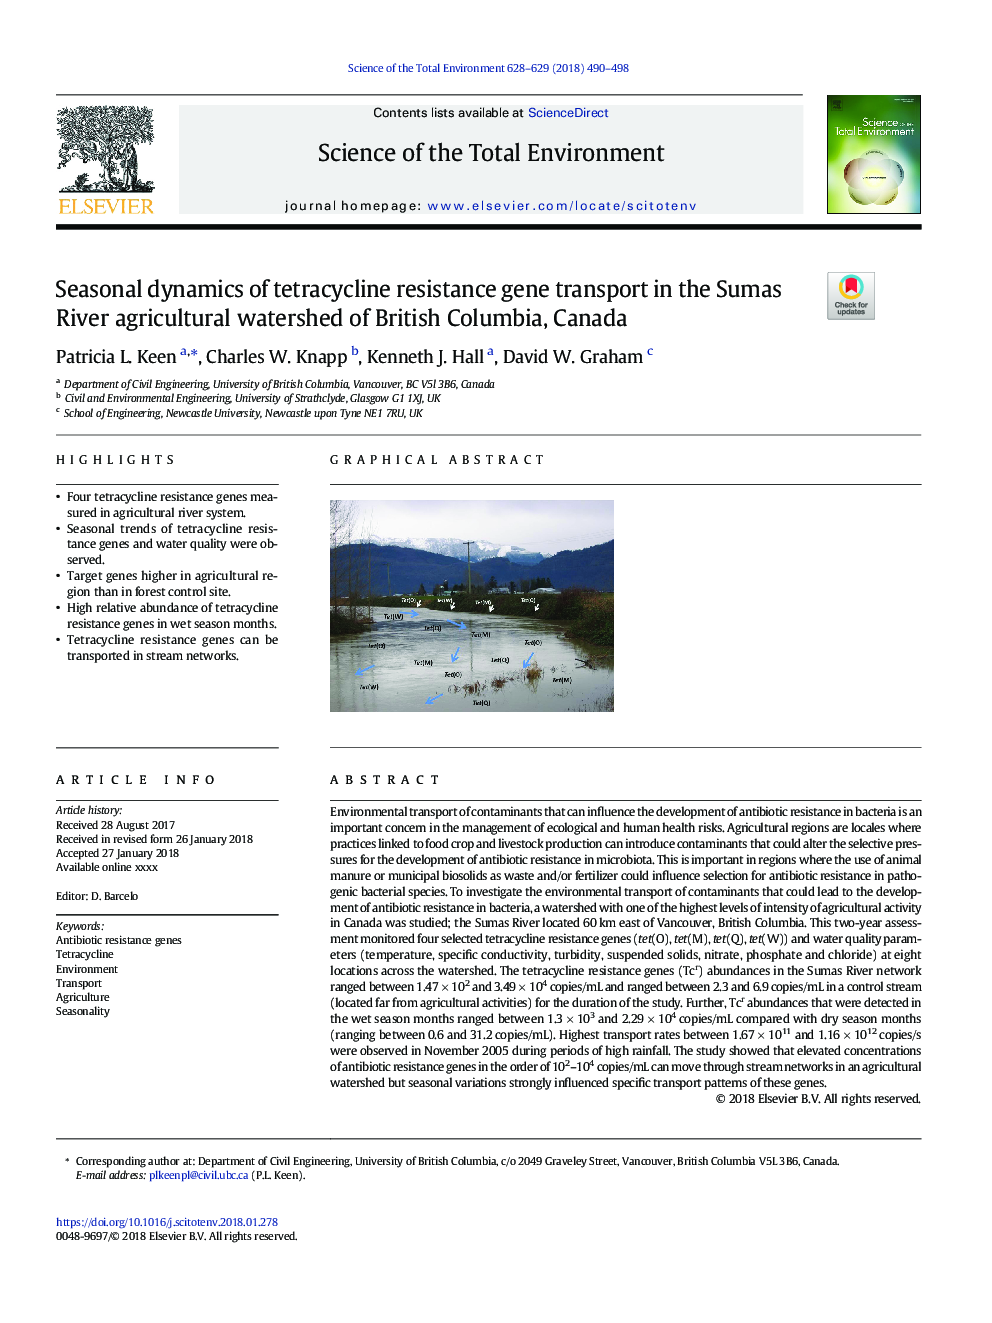 پویایی فصلی از انتقال ژن مقاومت به تتراسایکلین در حوزه آبخیز کشاورزی رودخانه سماس بریتیش کلمبیا، کانادا 